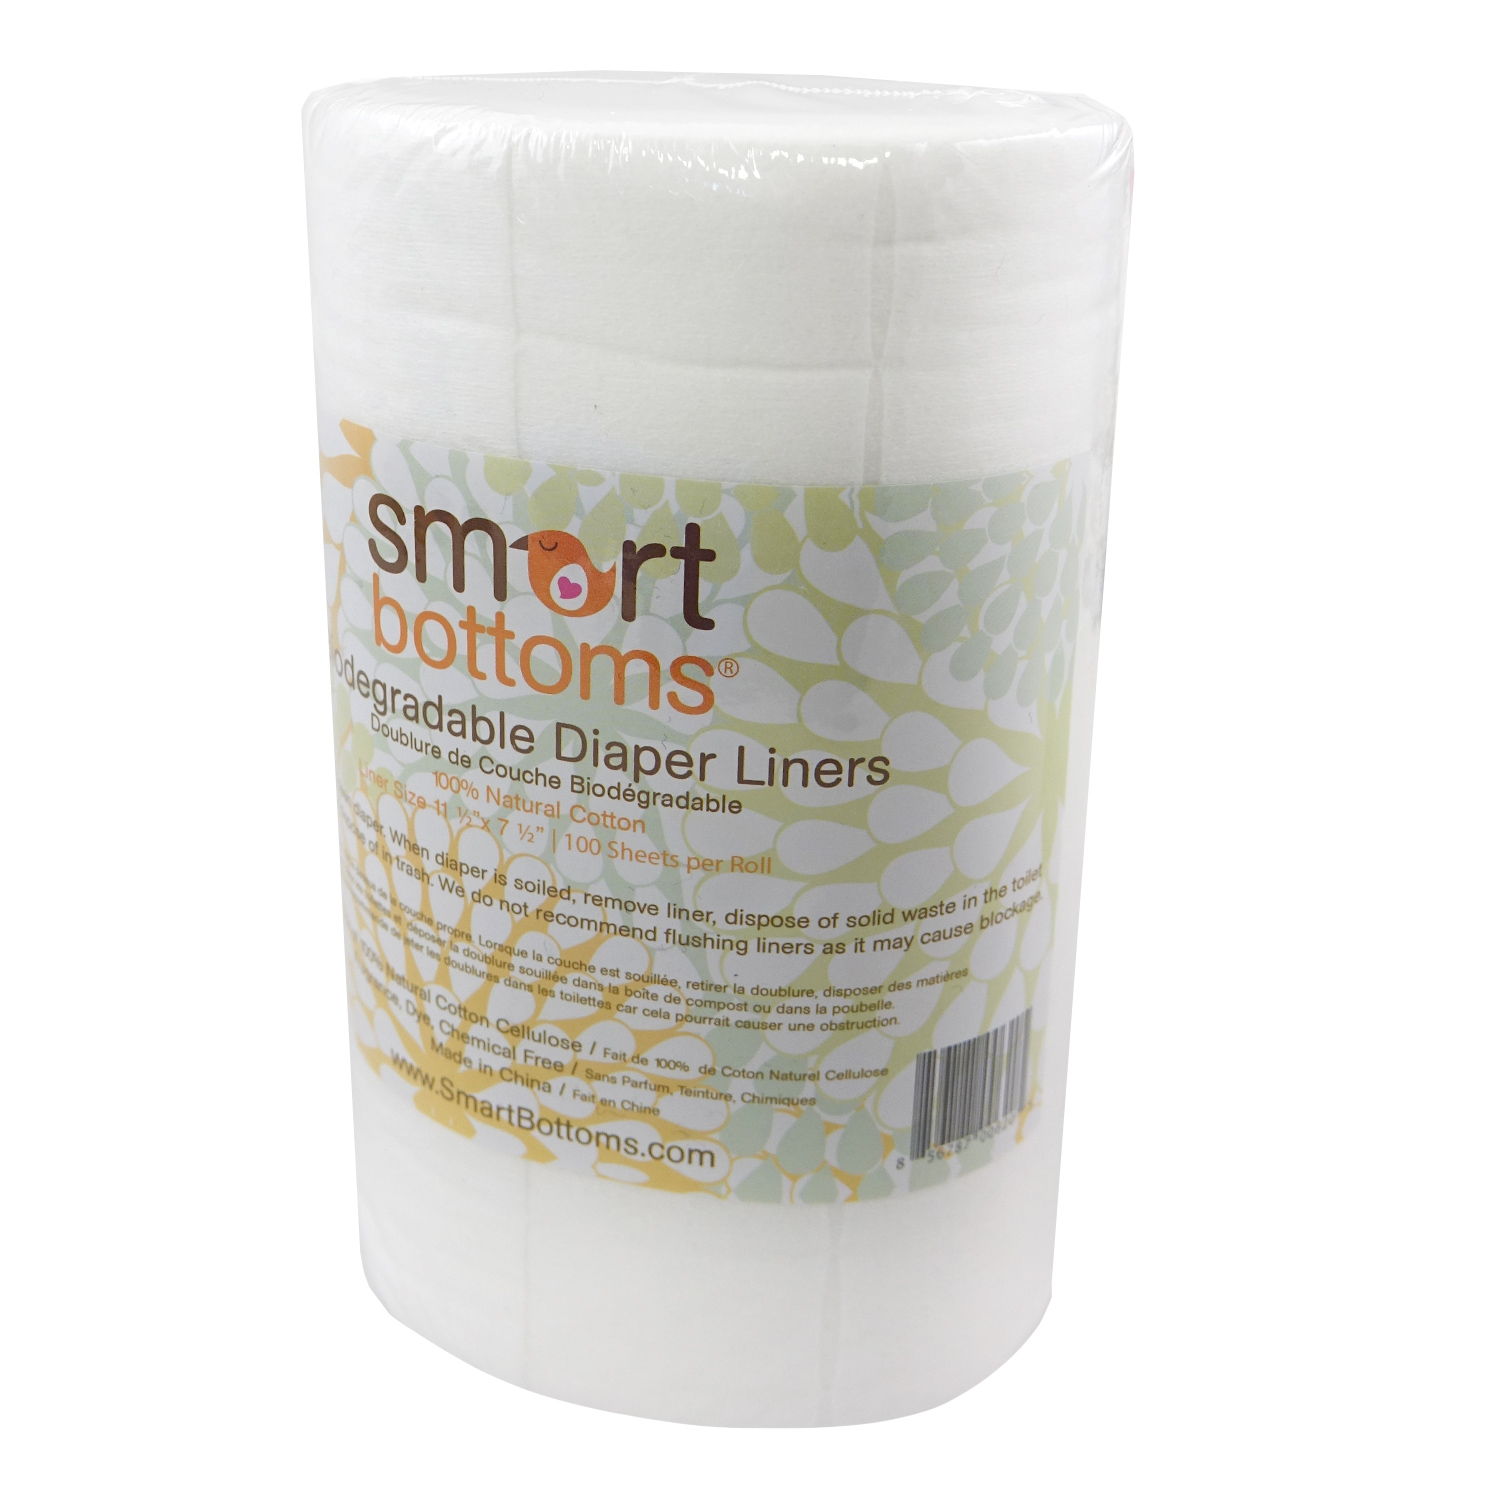 Smart Bottoms biodegradable diaper liners (cotton)